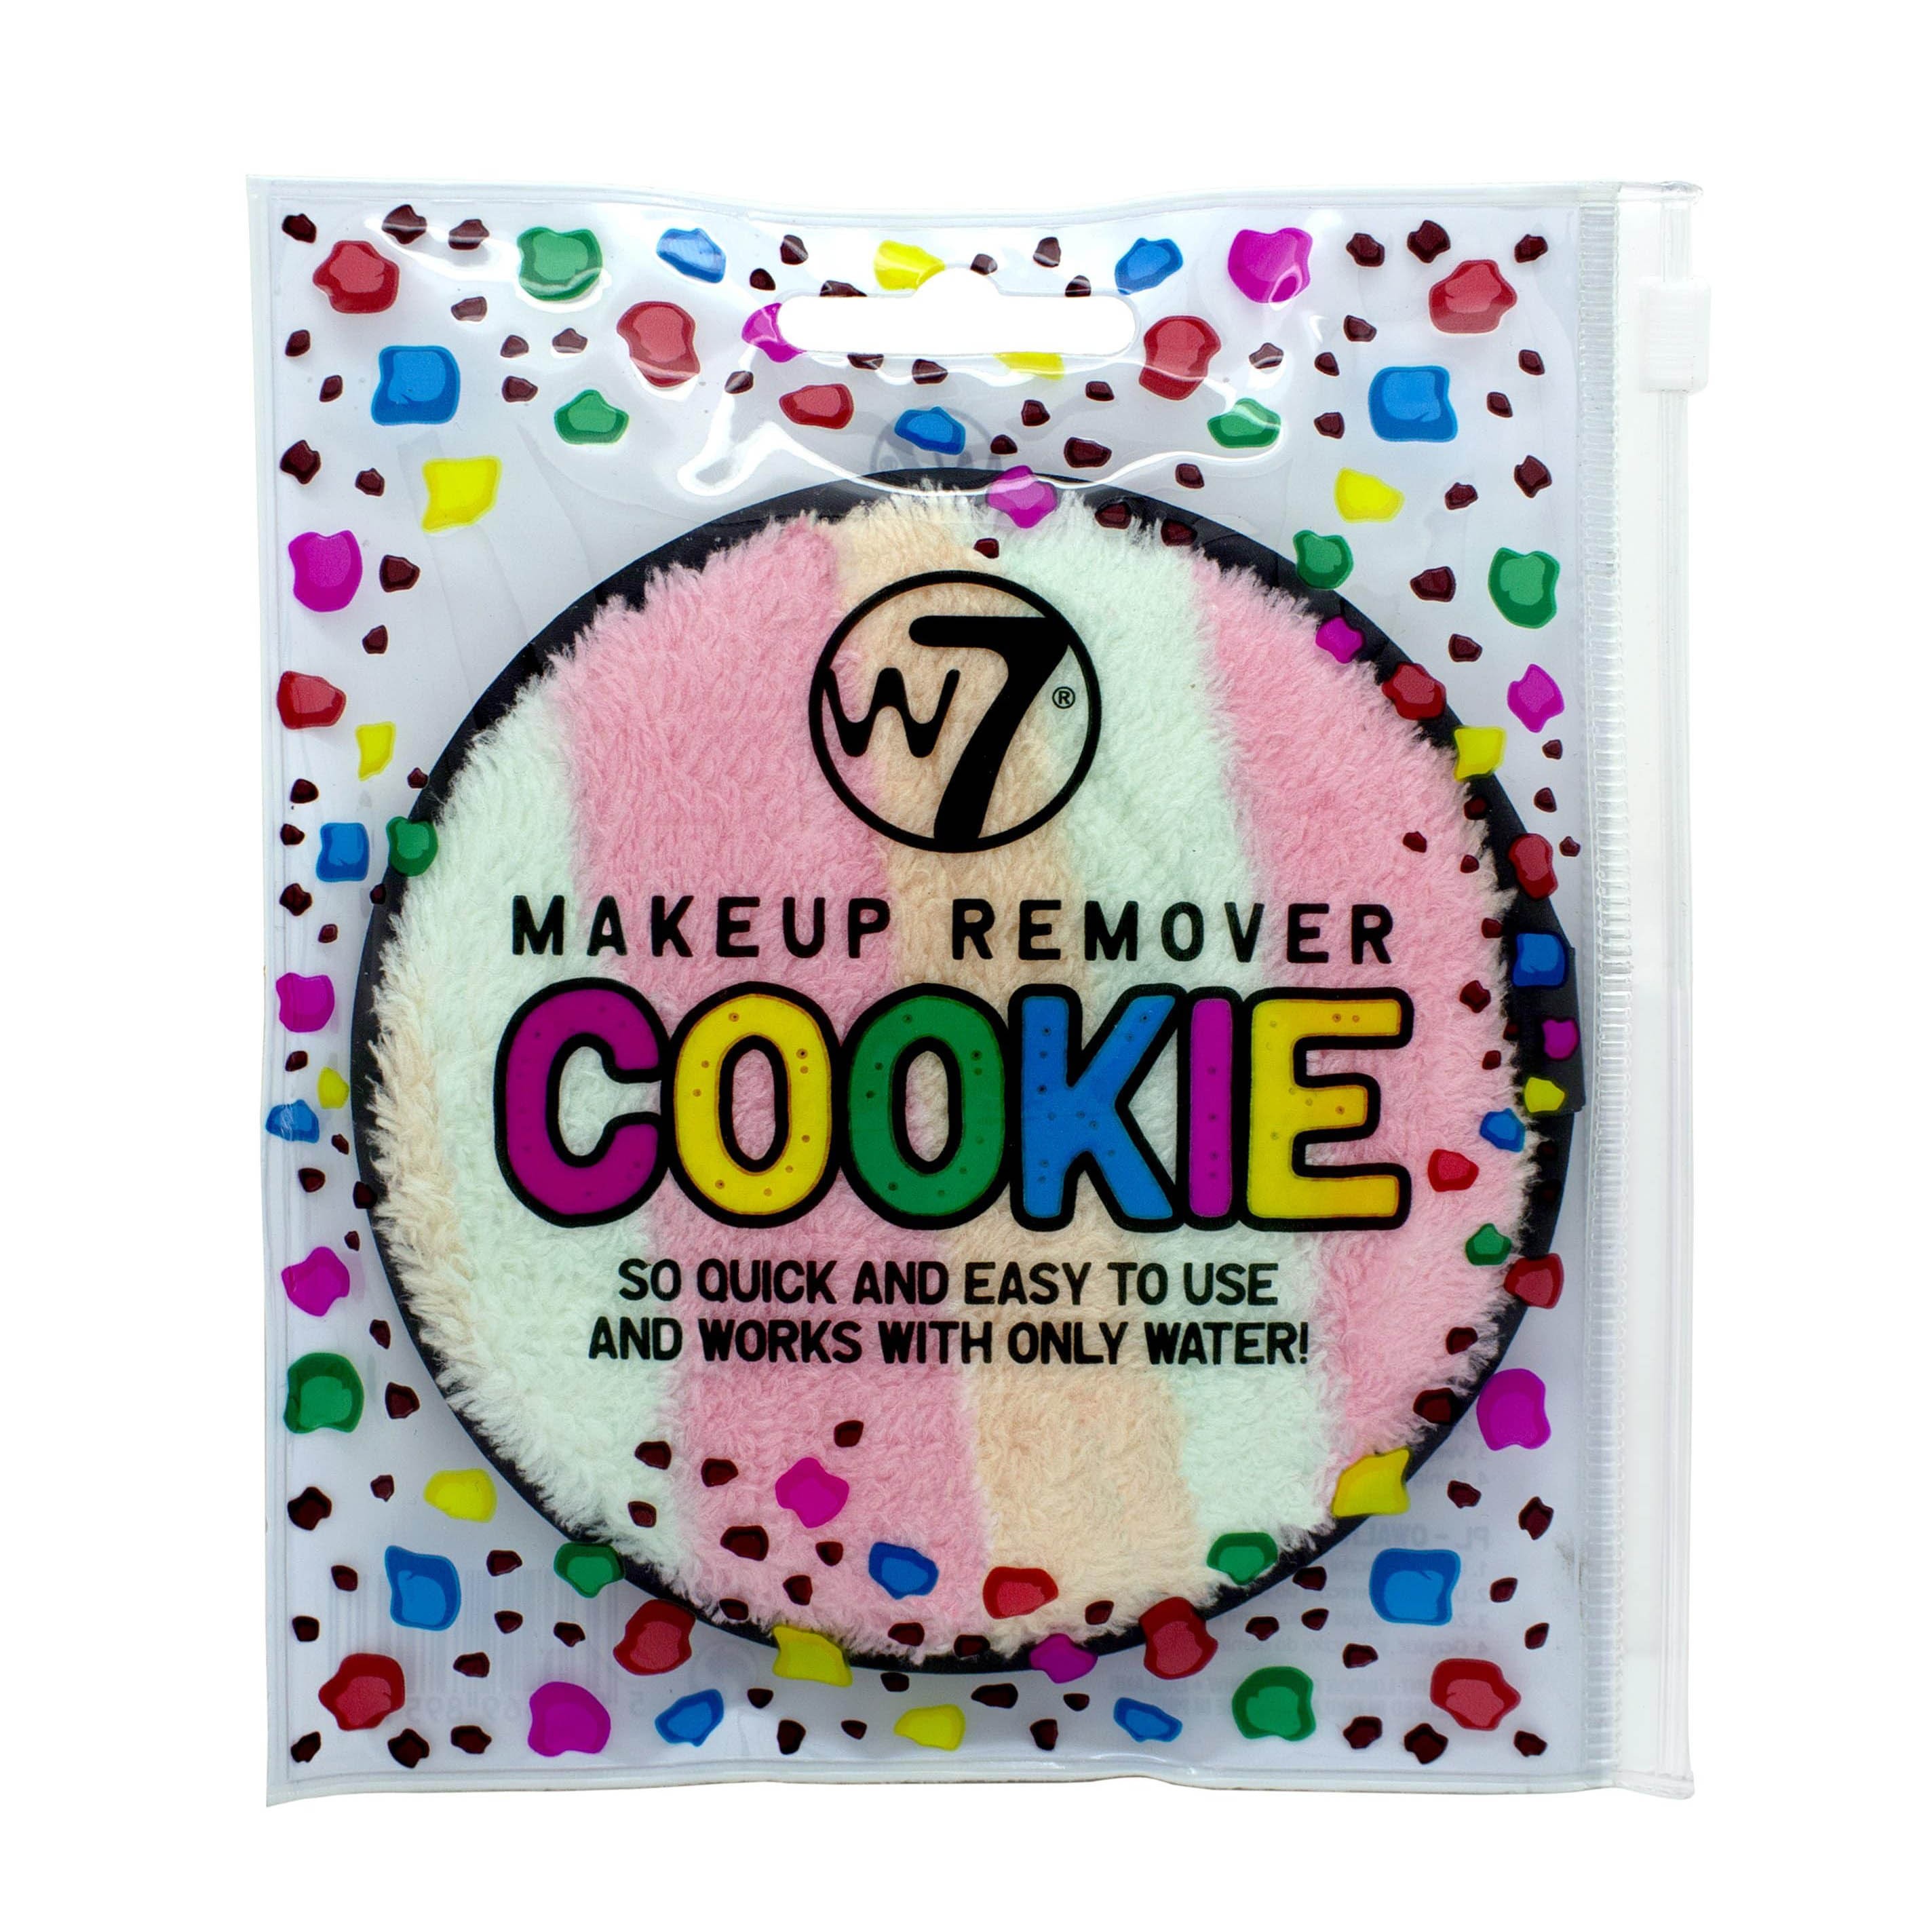 Makeup Remover Cookie